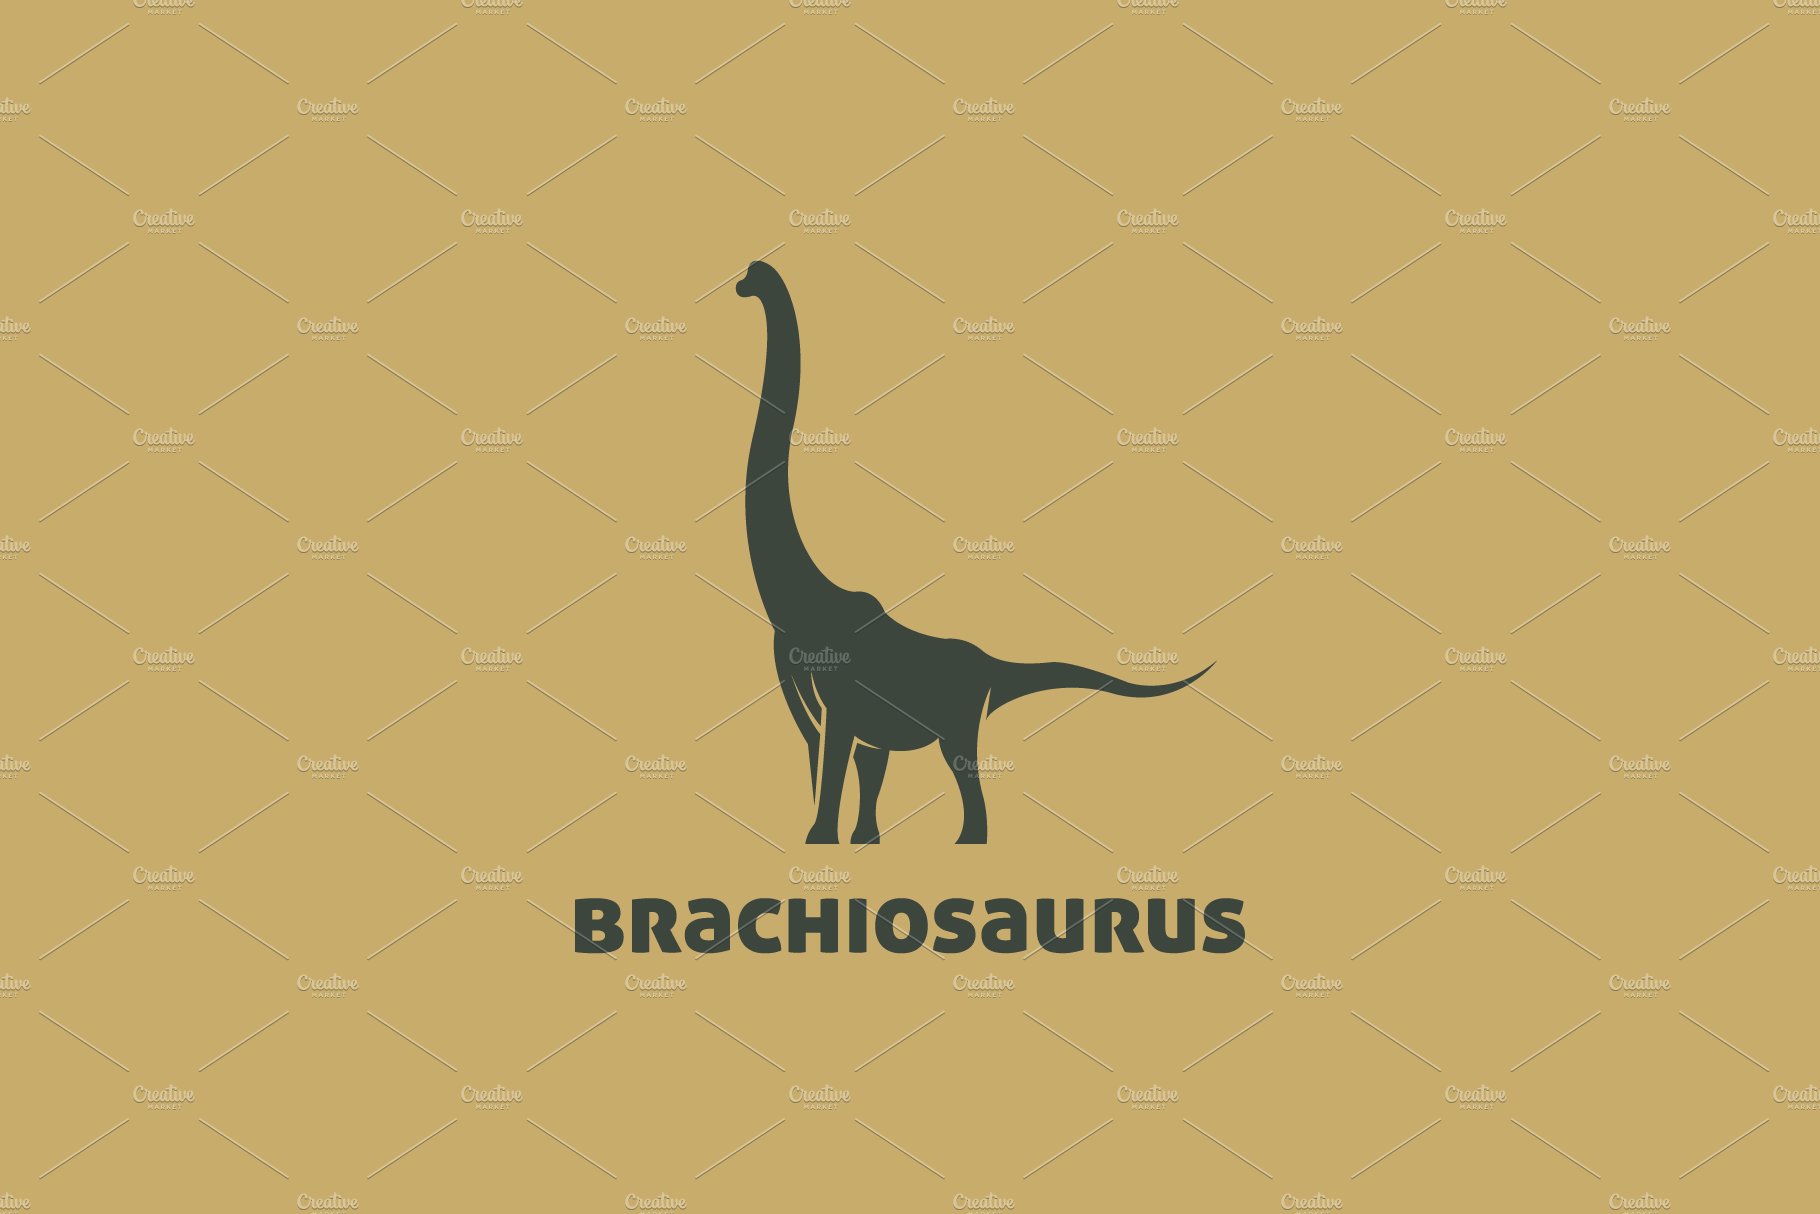 Brachiosaurus Logo preview image.